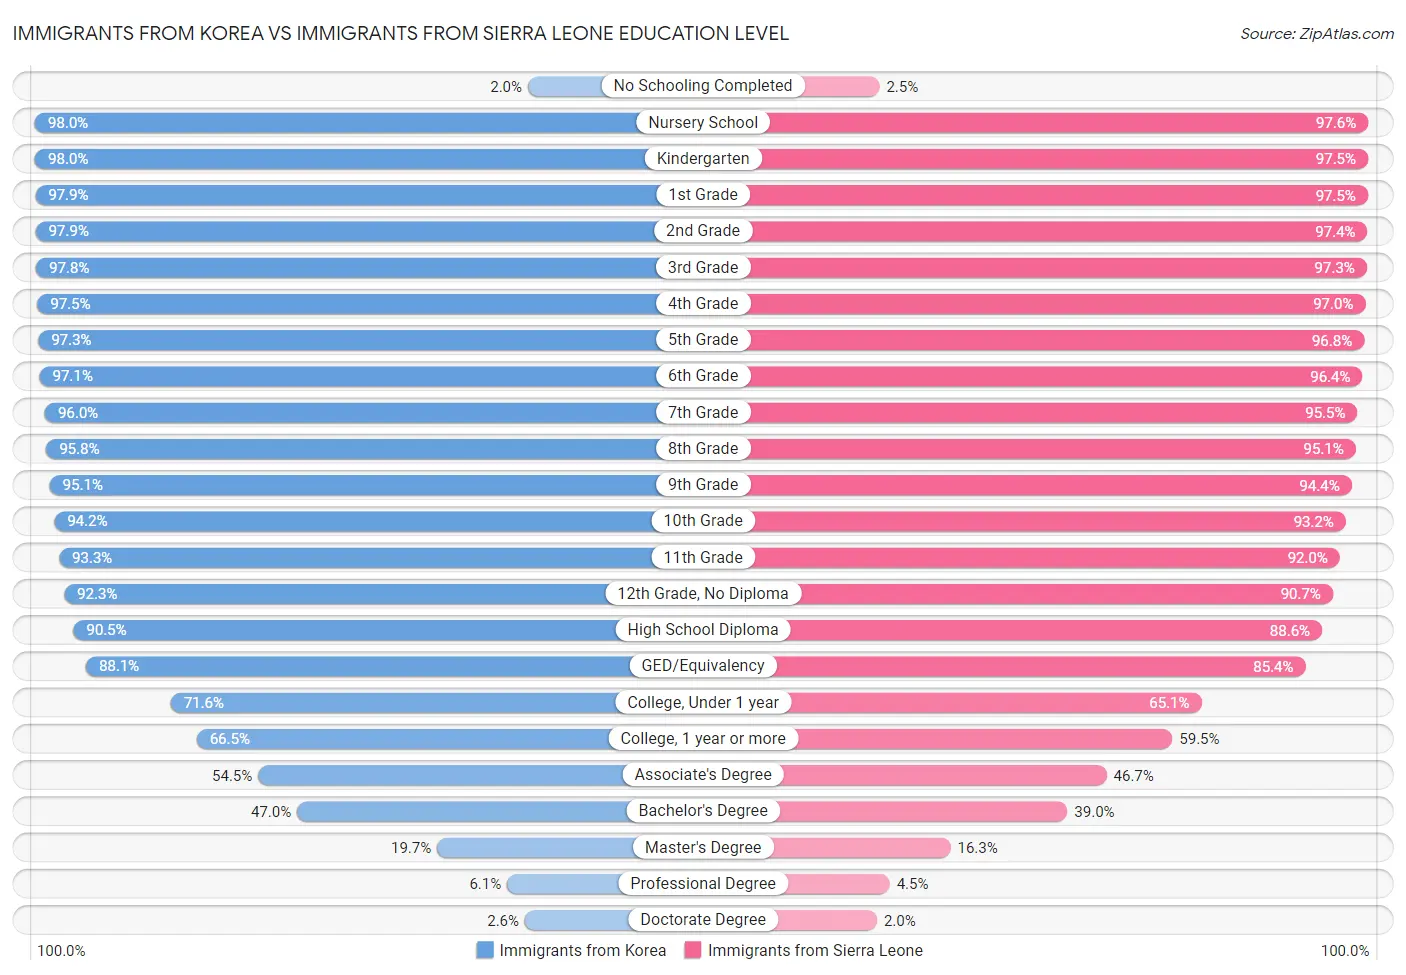 Immigrants from Korea vs Immigrants from Sierra Leone Education Level